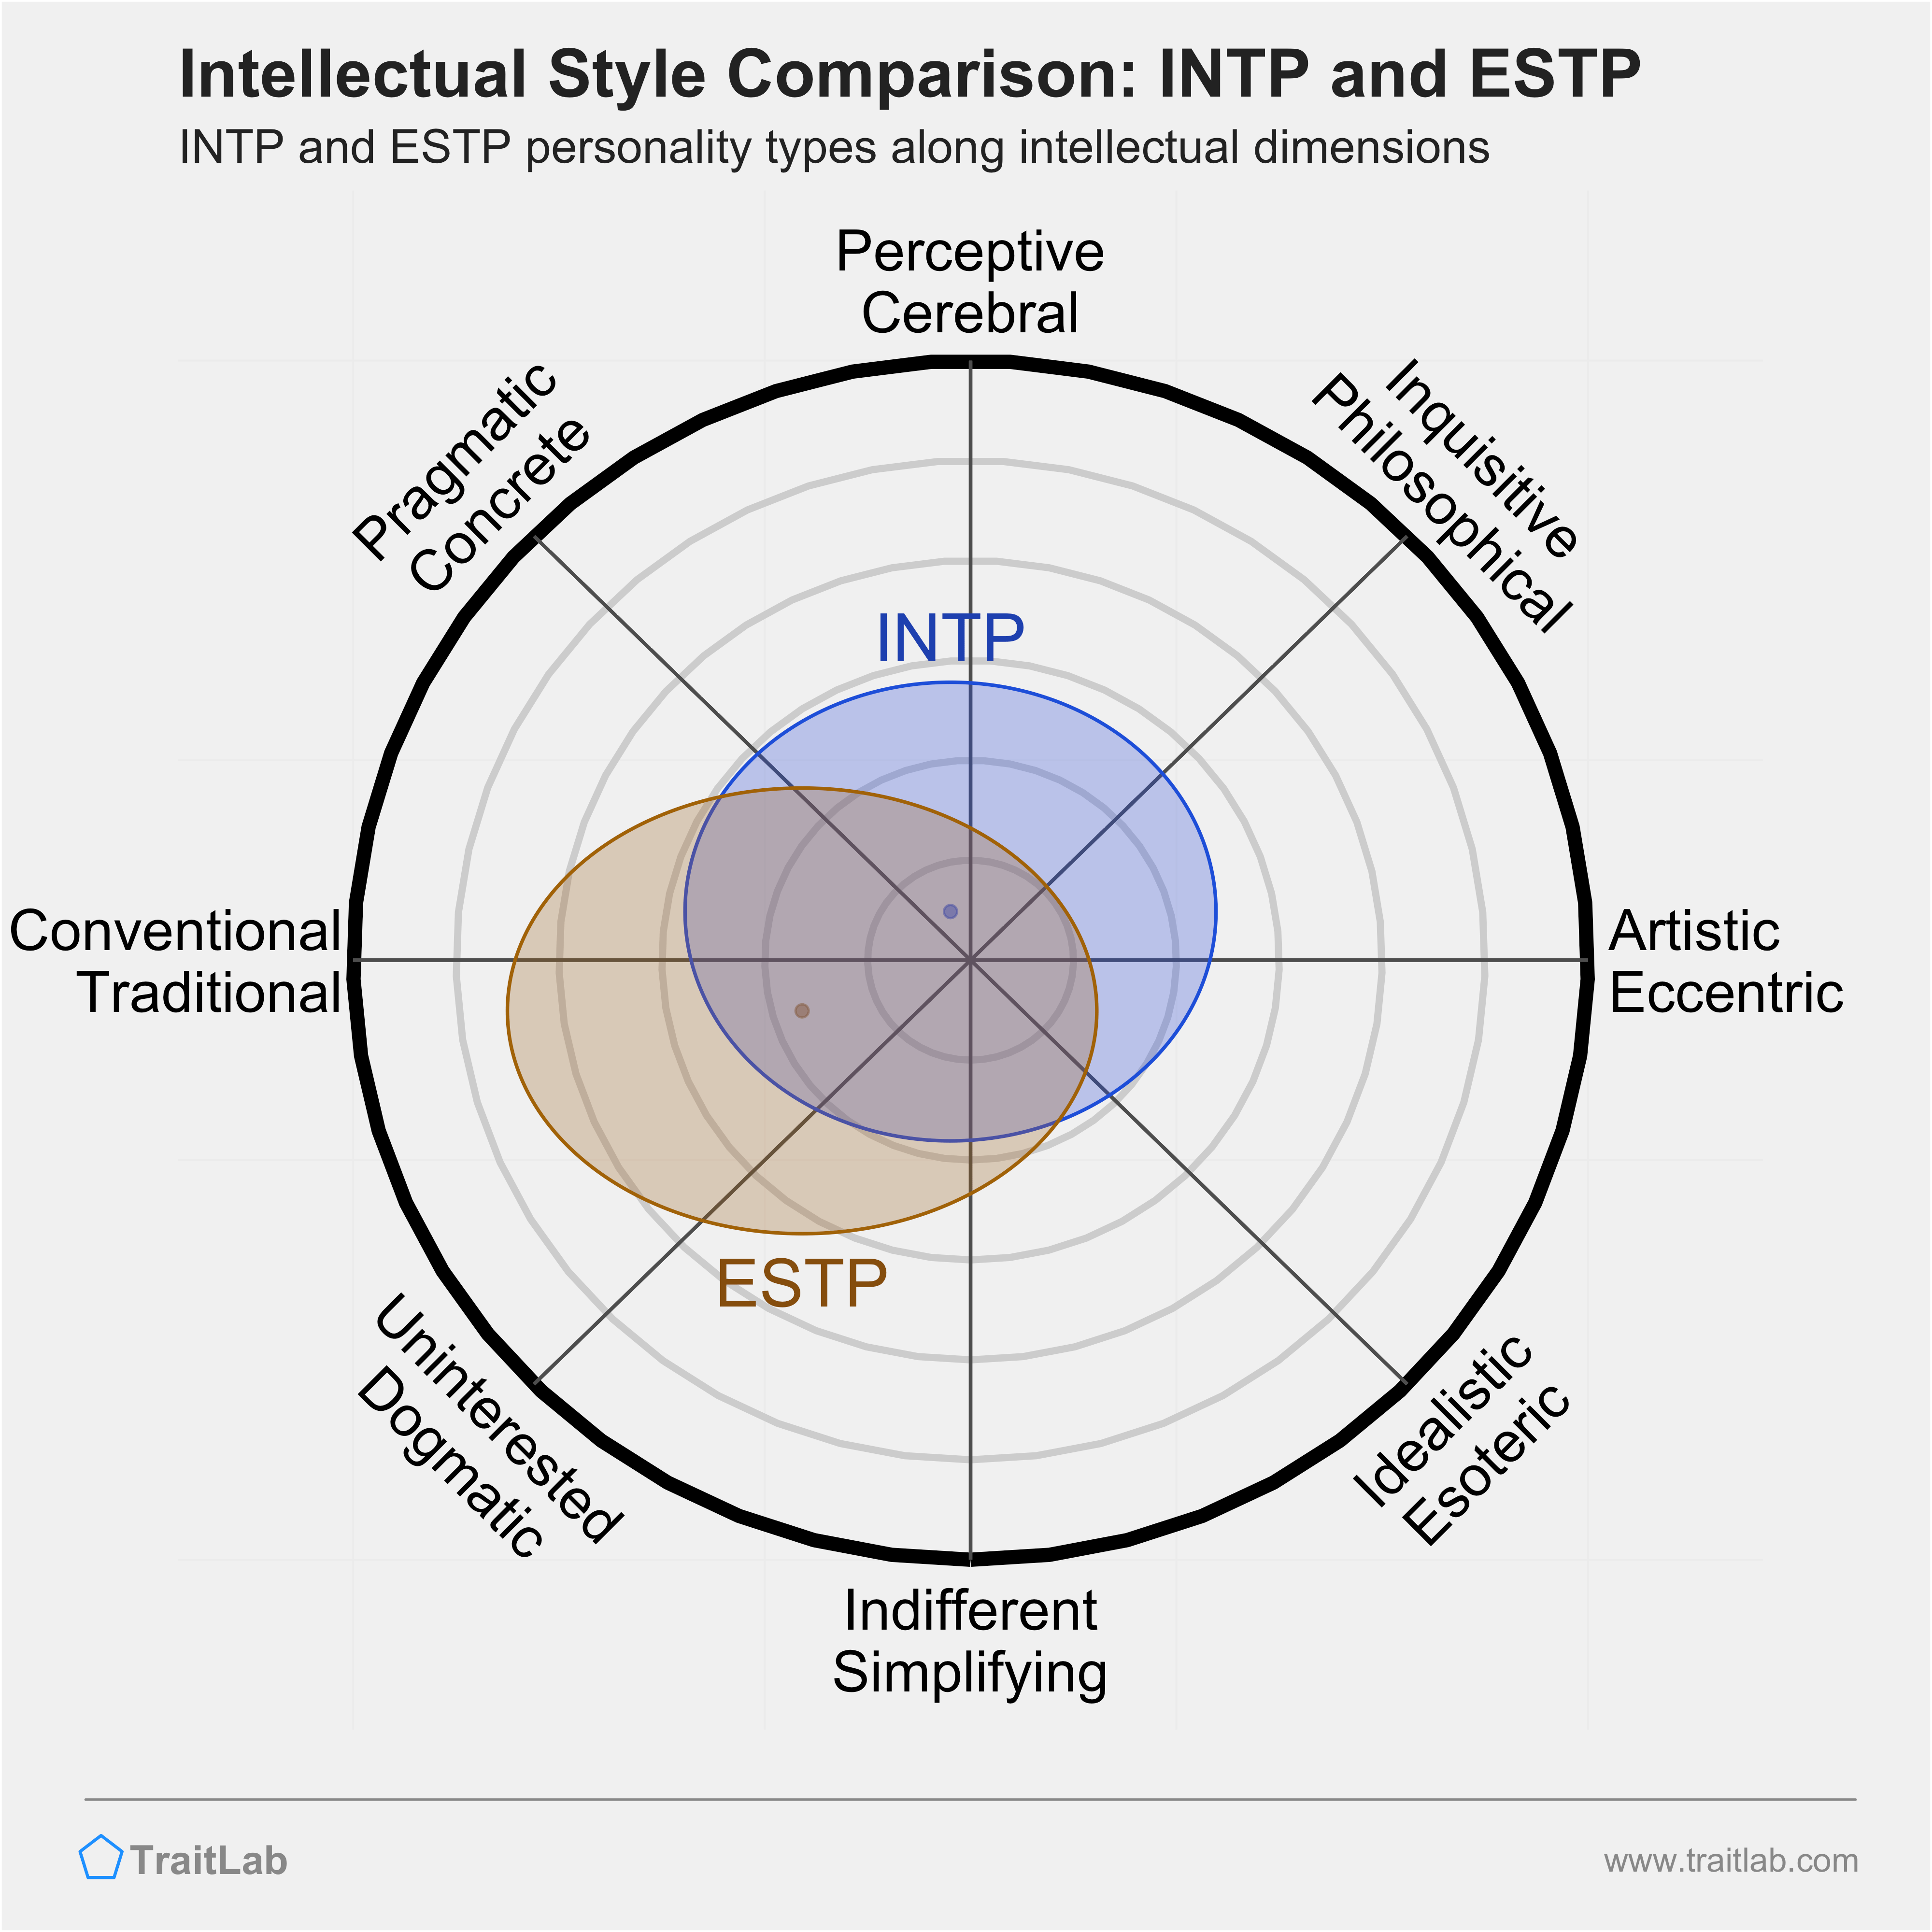 INTP and ESTP comparison across intellectual dimensions